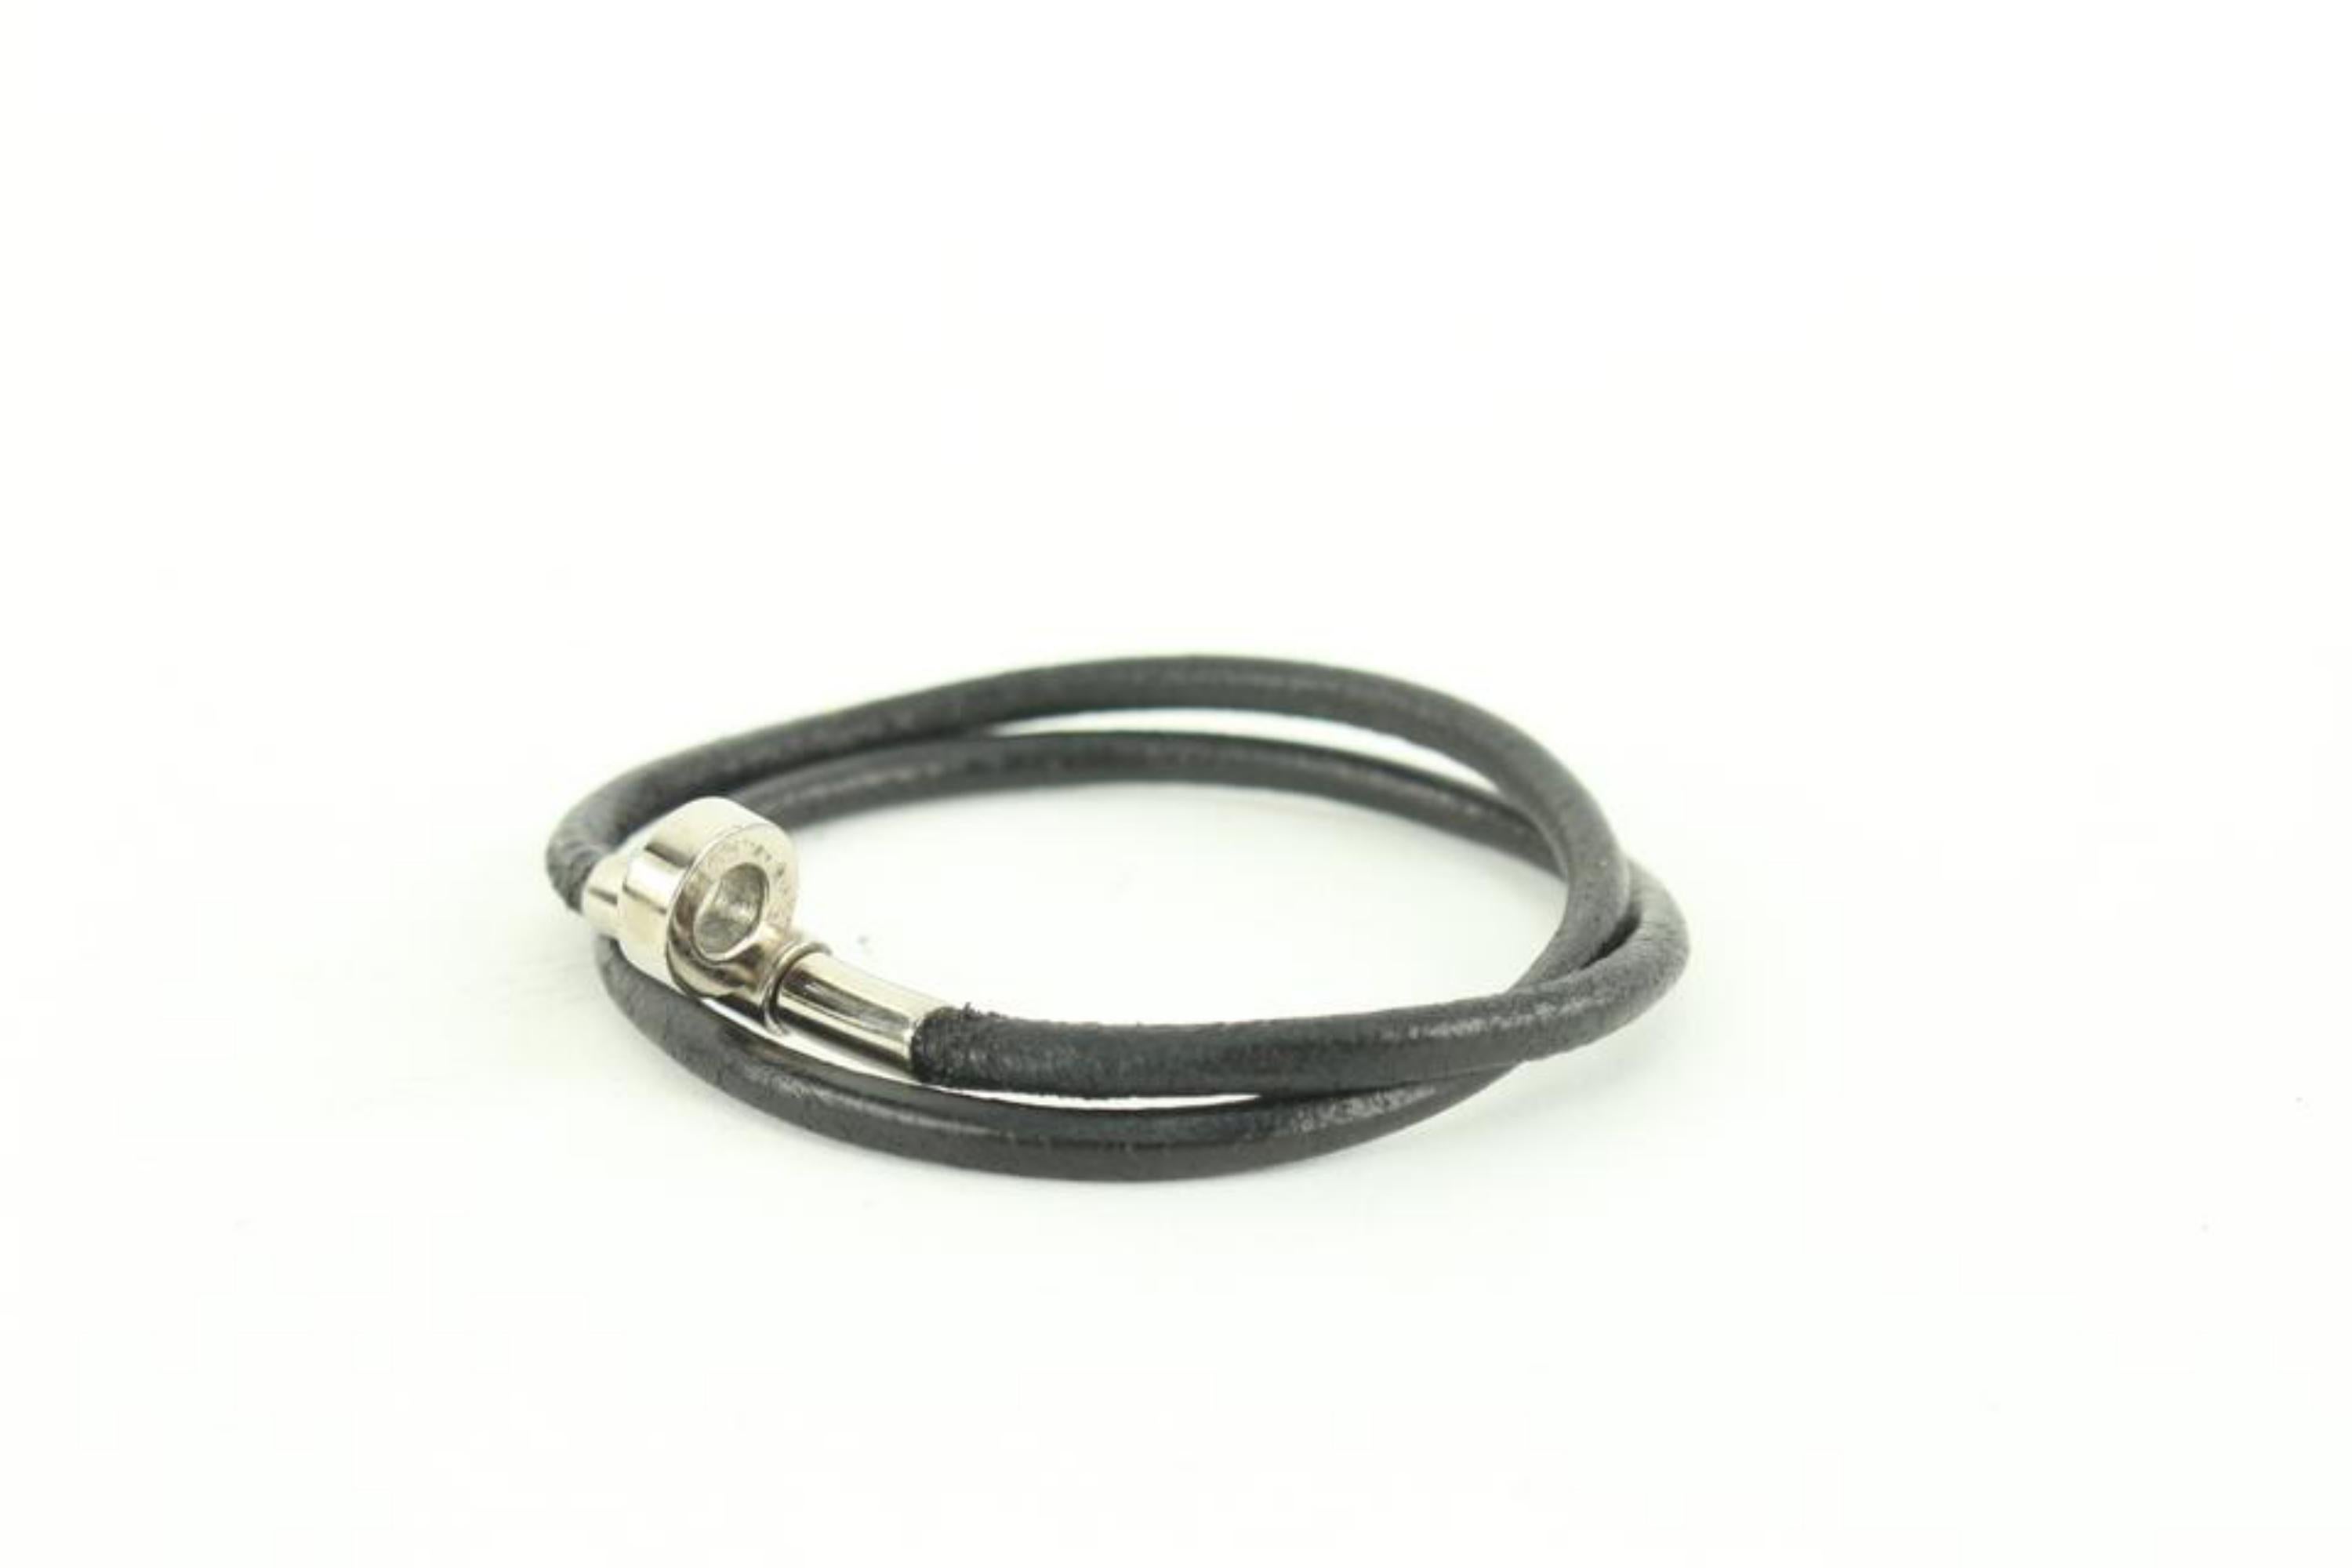 Hermès Silver x Black Leather String Bracelet 16h22
Measurements: Length:  2